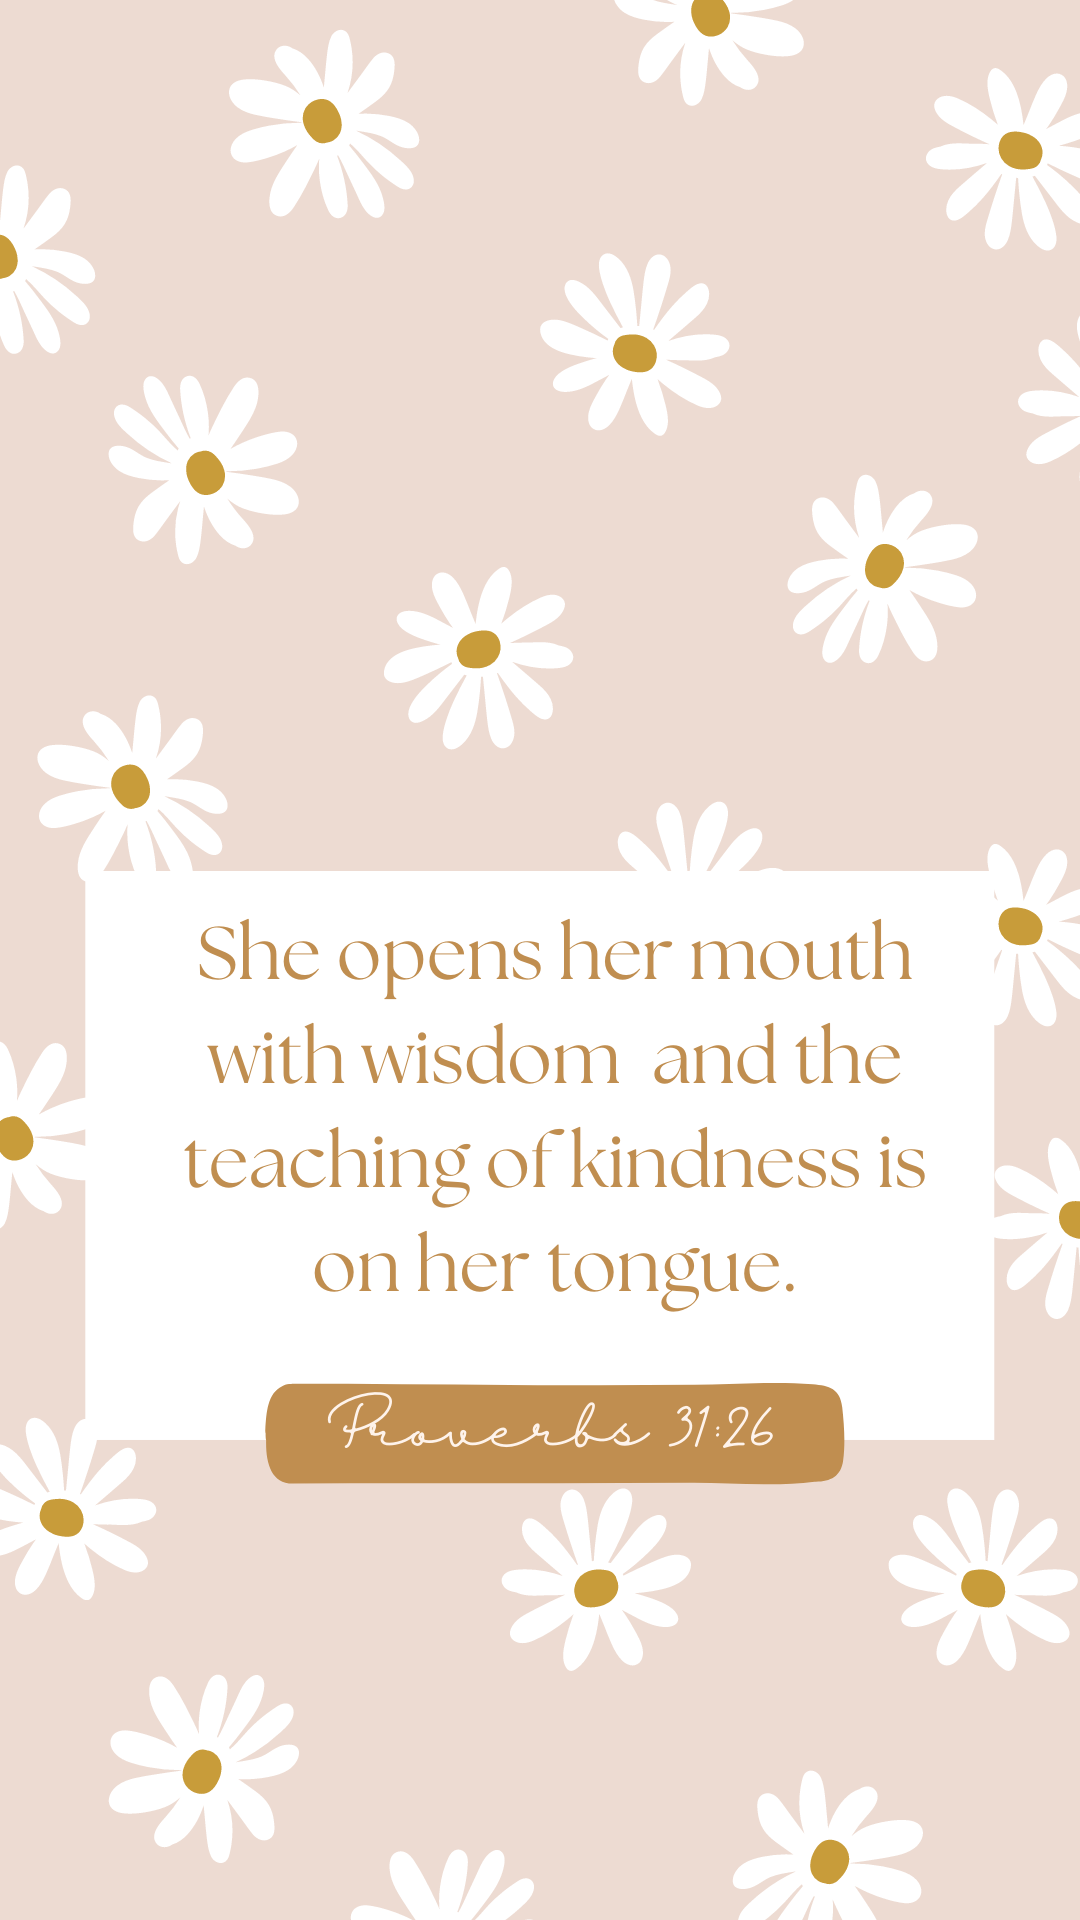 Bible verse lock screen.
Proverbs 31:26